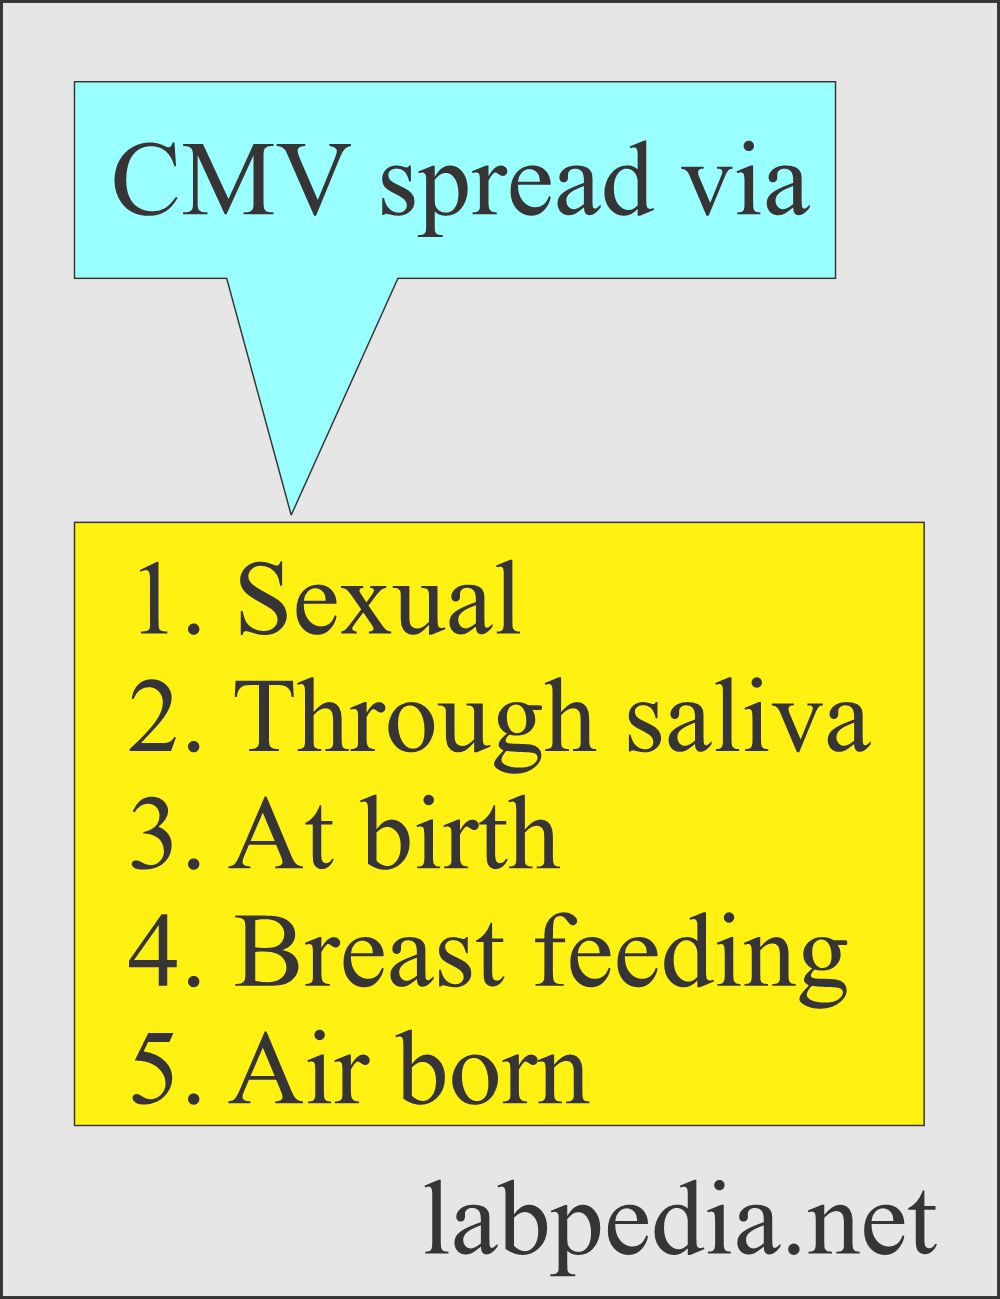 CMV spread